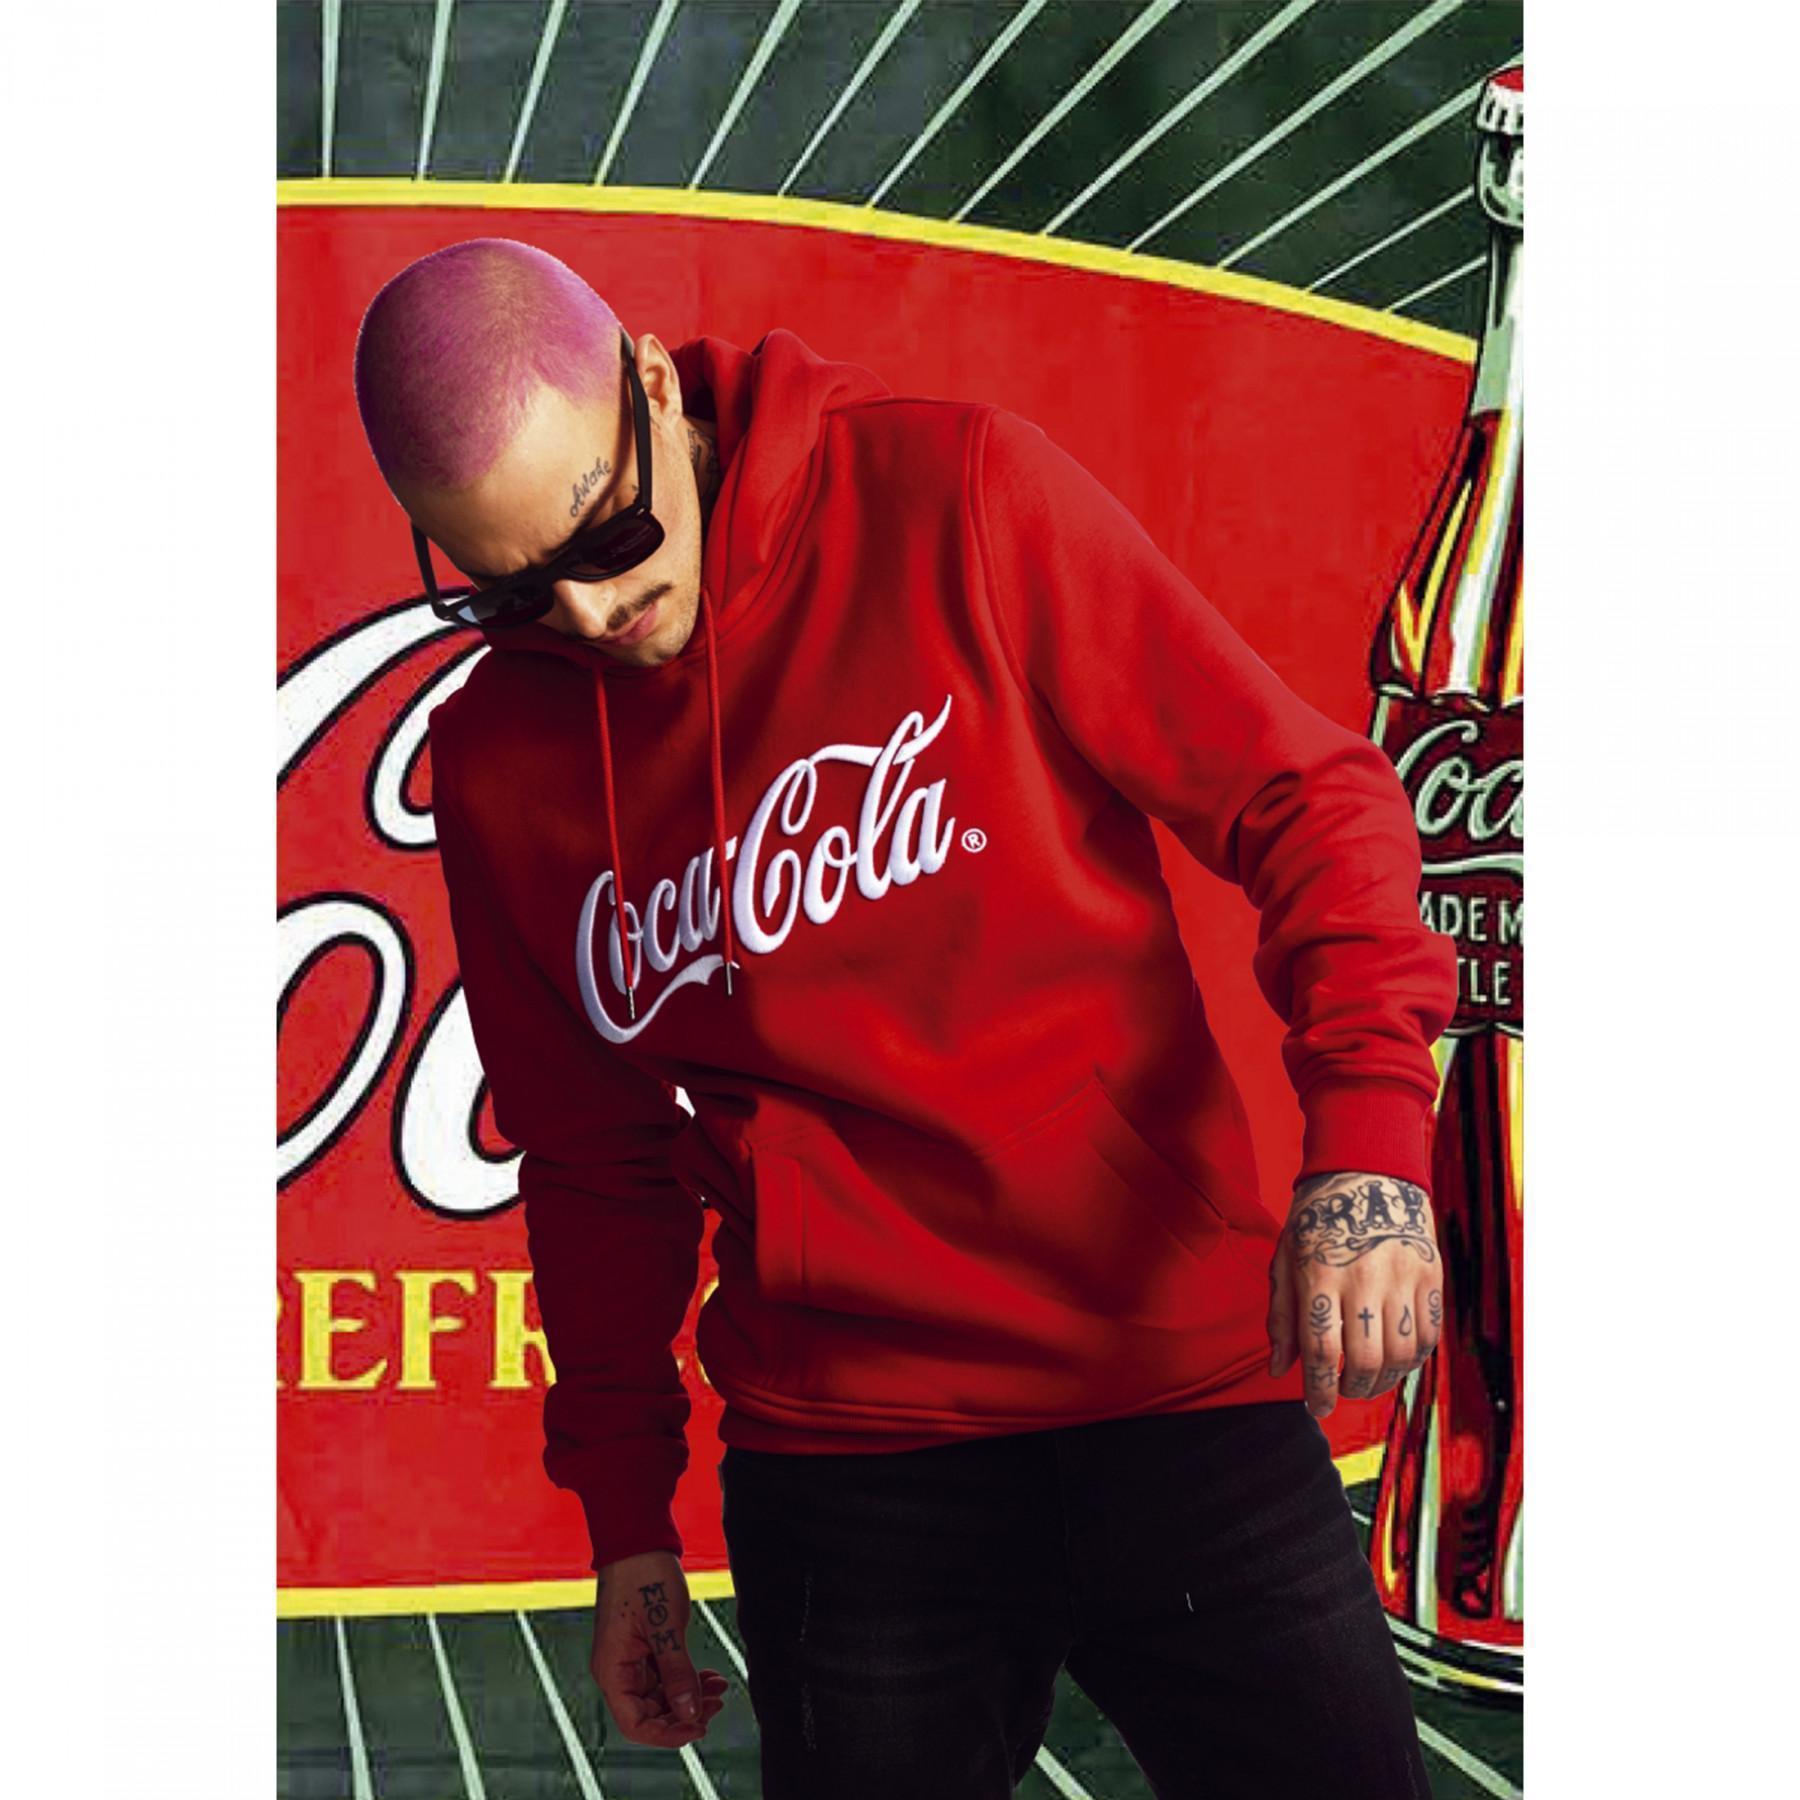 Sweatshirt Urban Classic coca cola claic